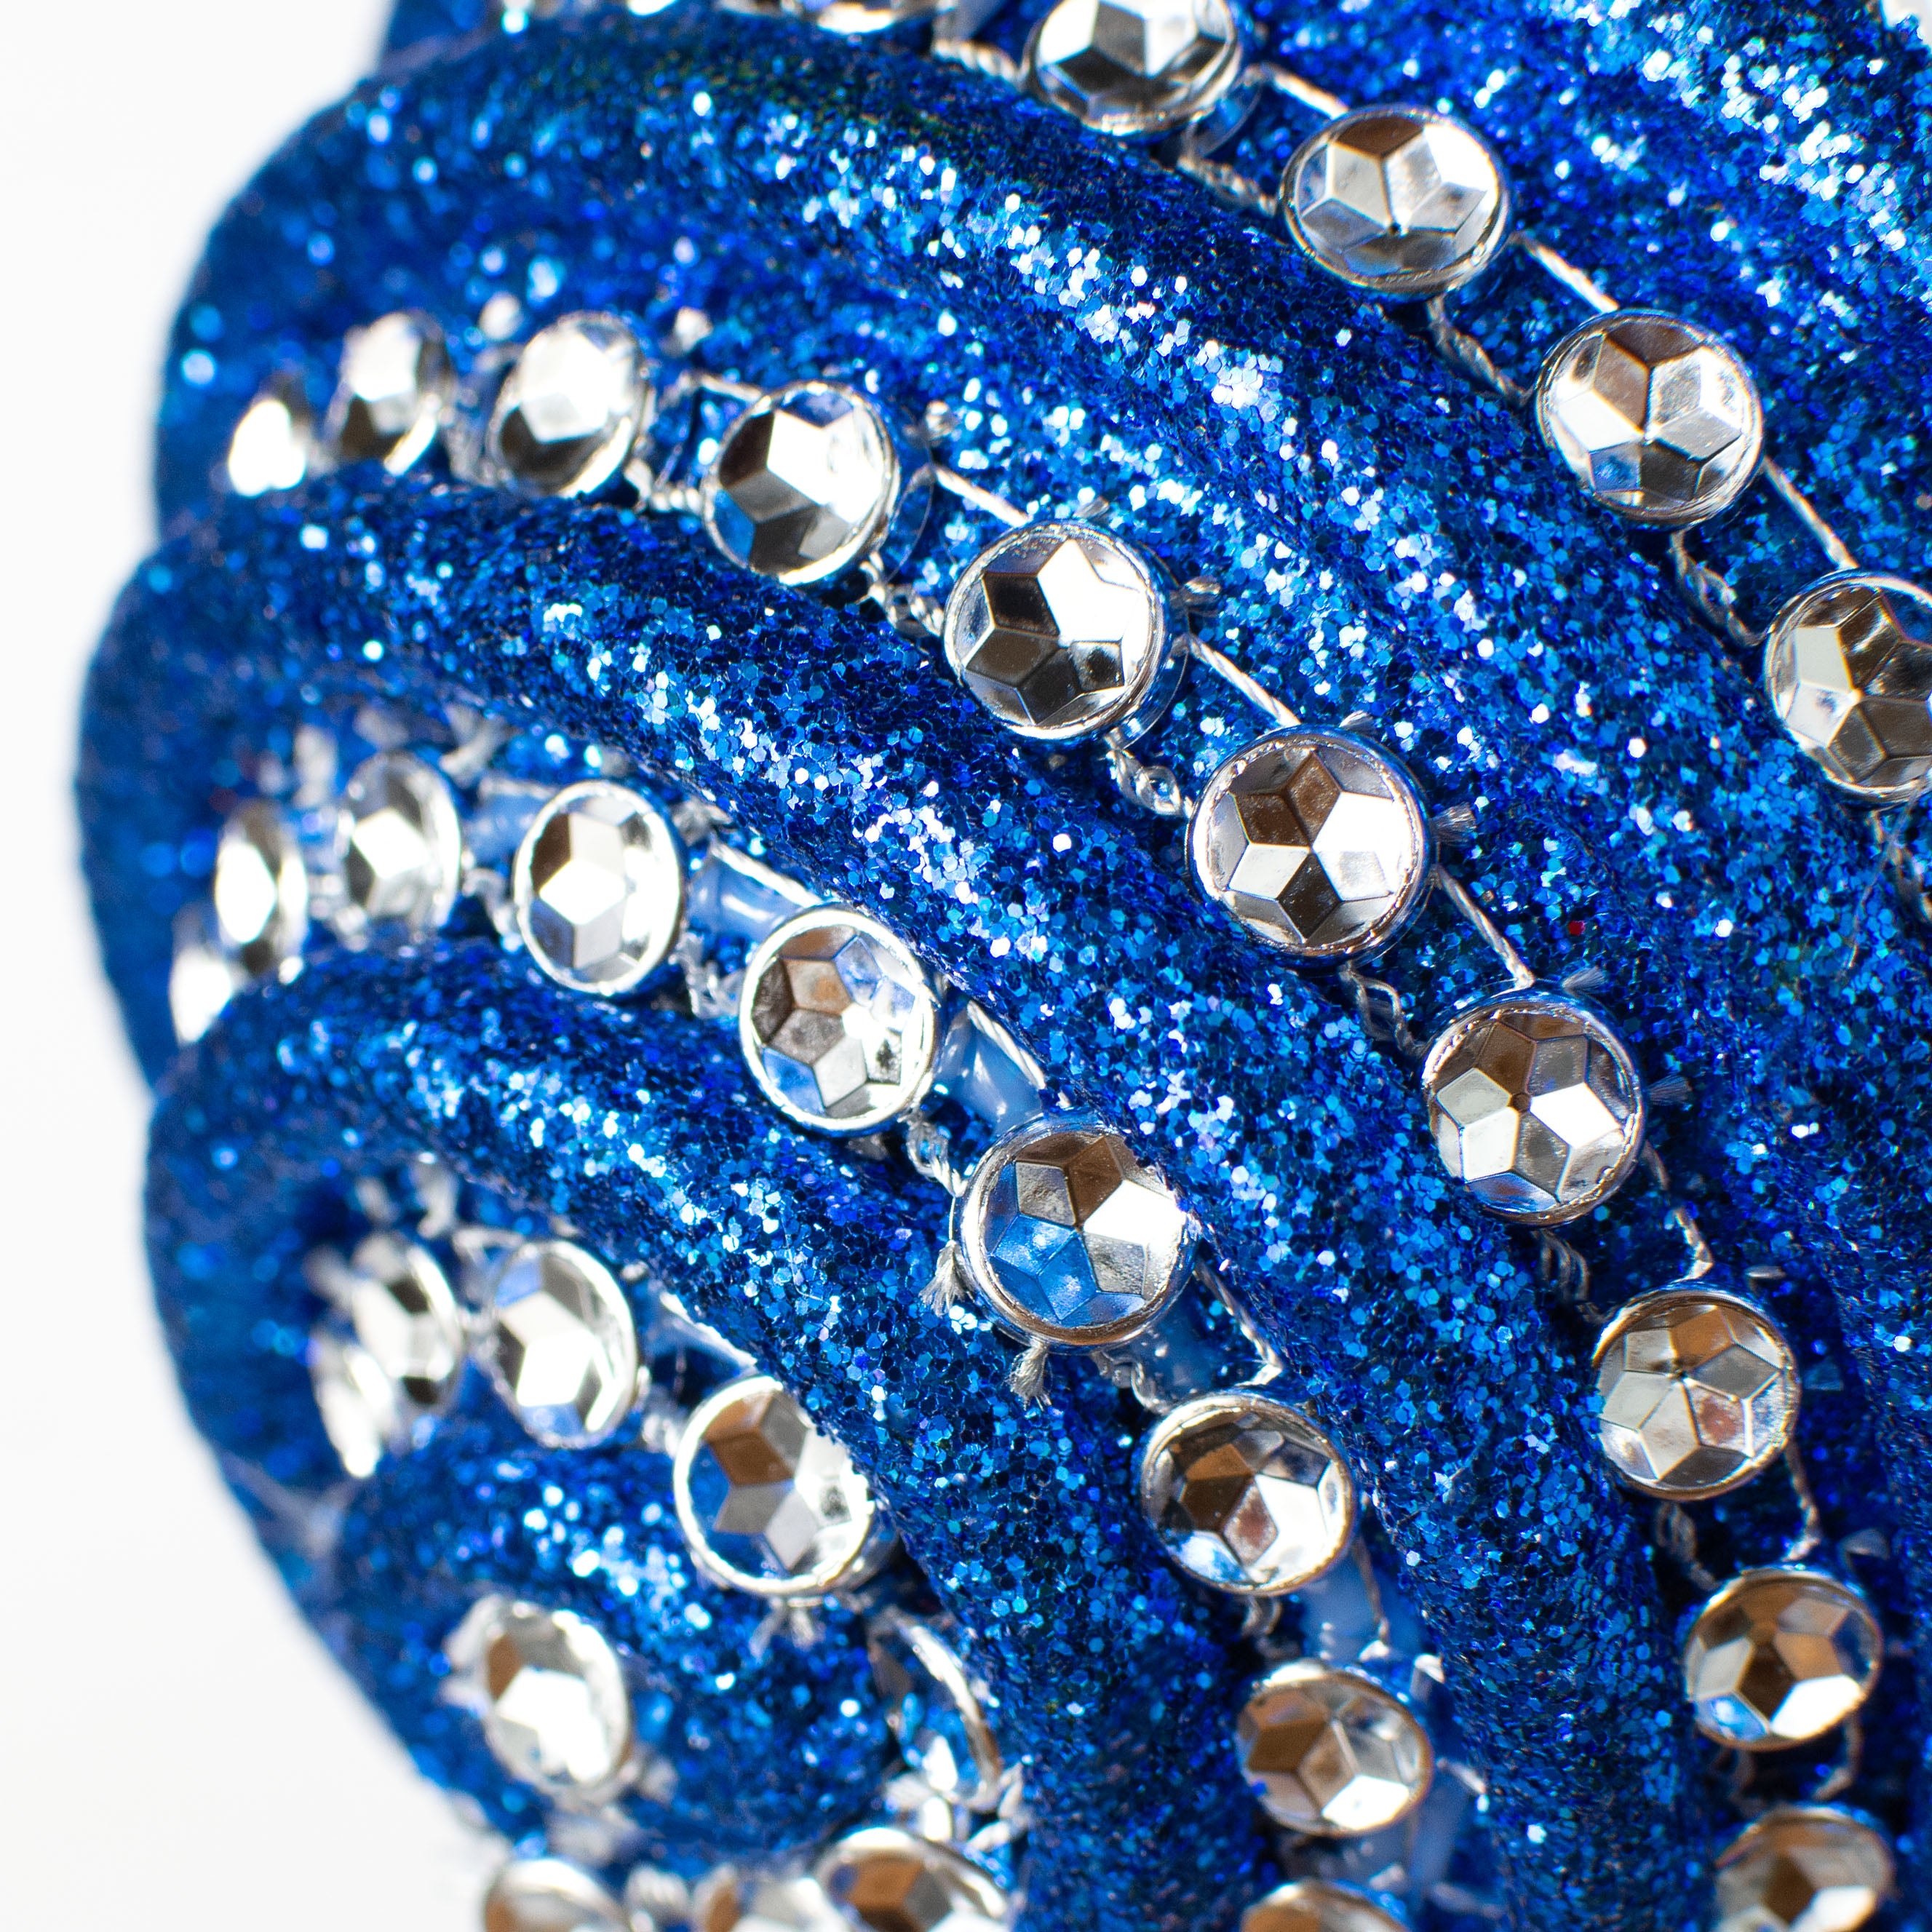 4" Jewel Ball Ornament: Blue & Silver (Box of 4)